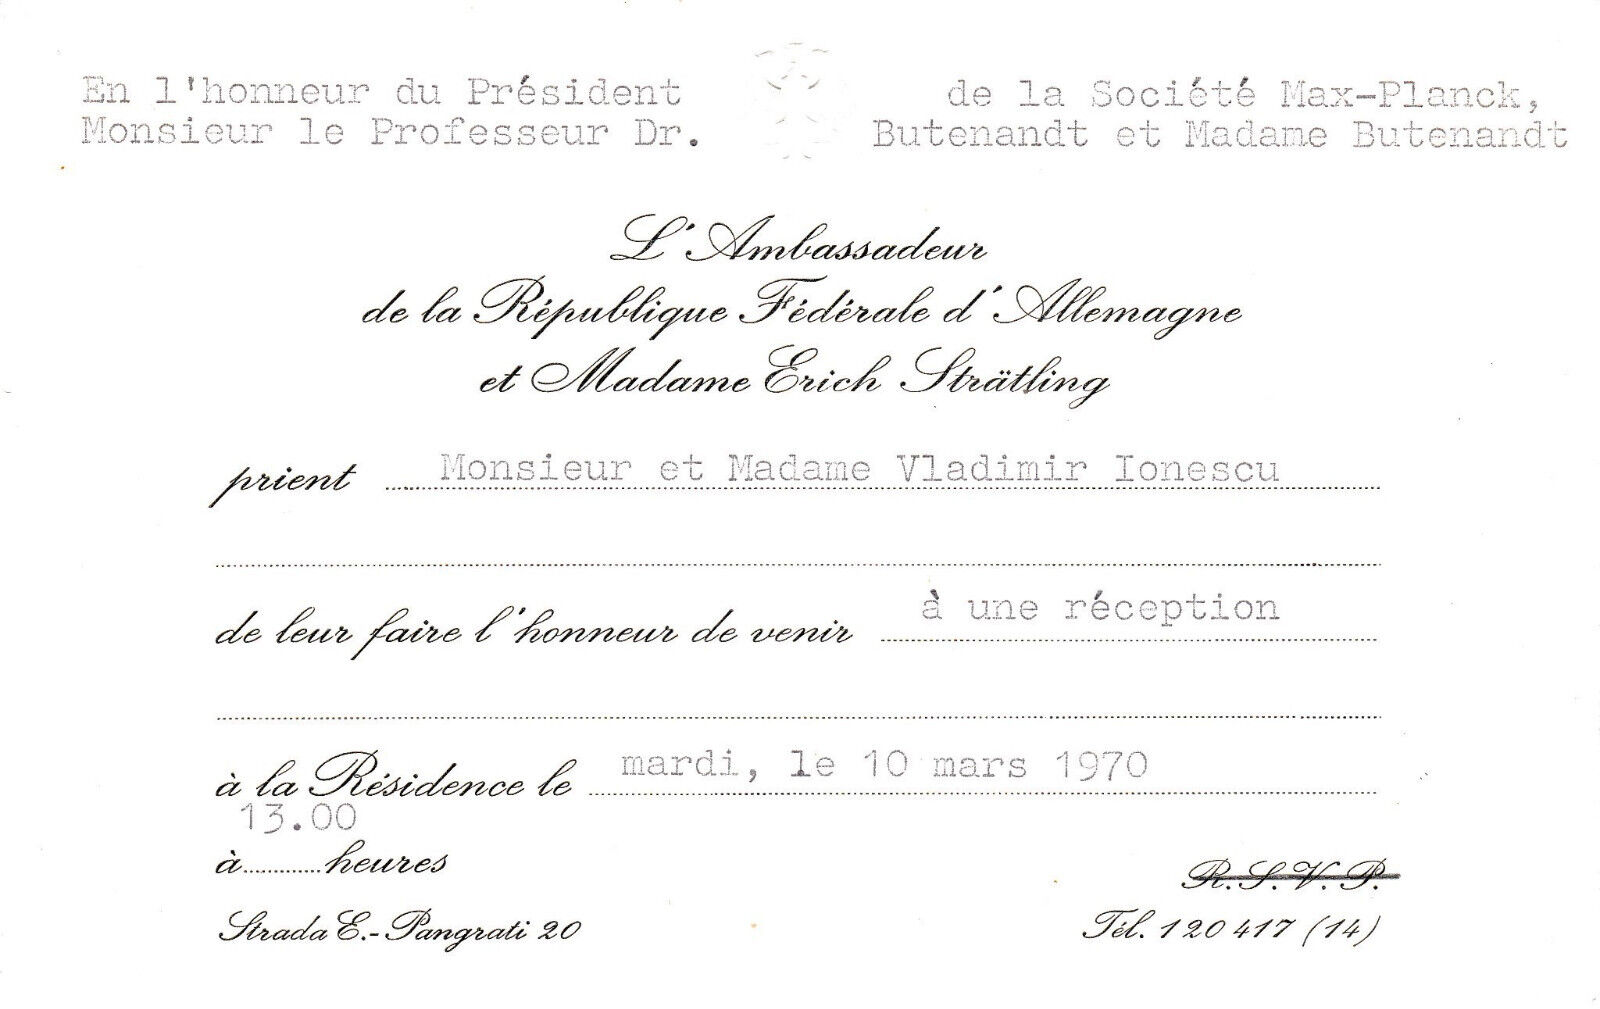 Romania, 1970, Vintage Gala Reception Invitation - Romanian Embassy of Germany